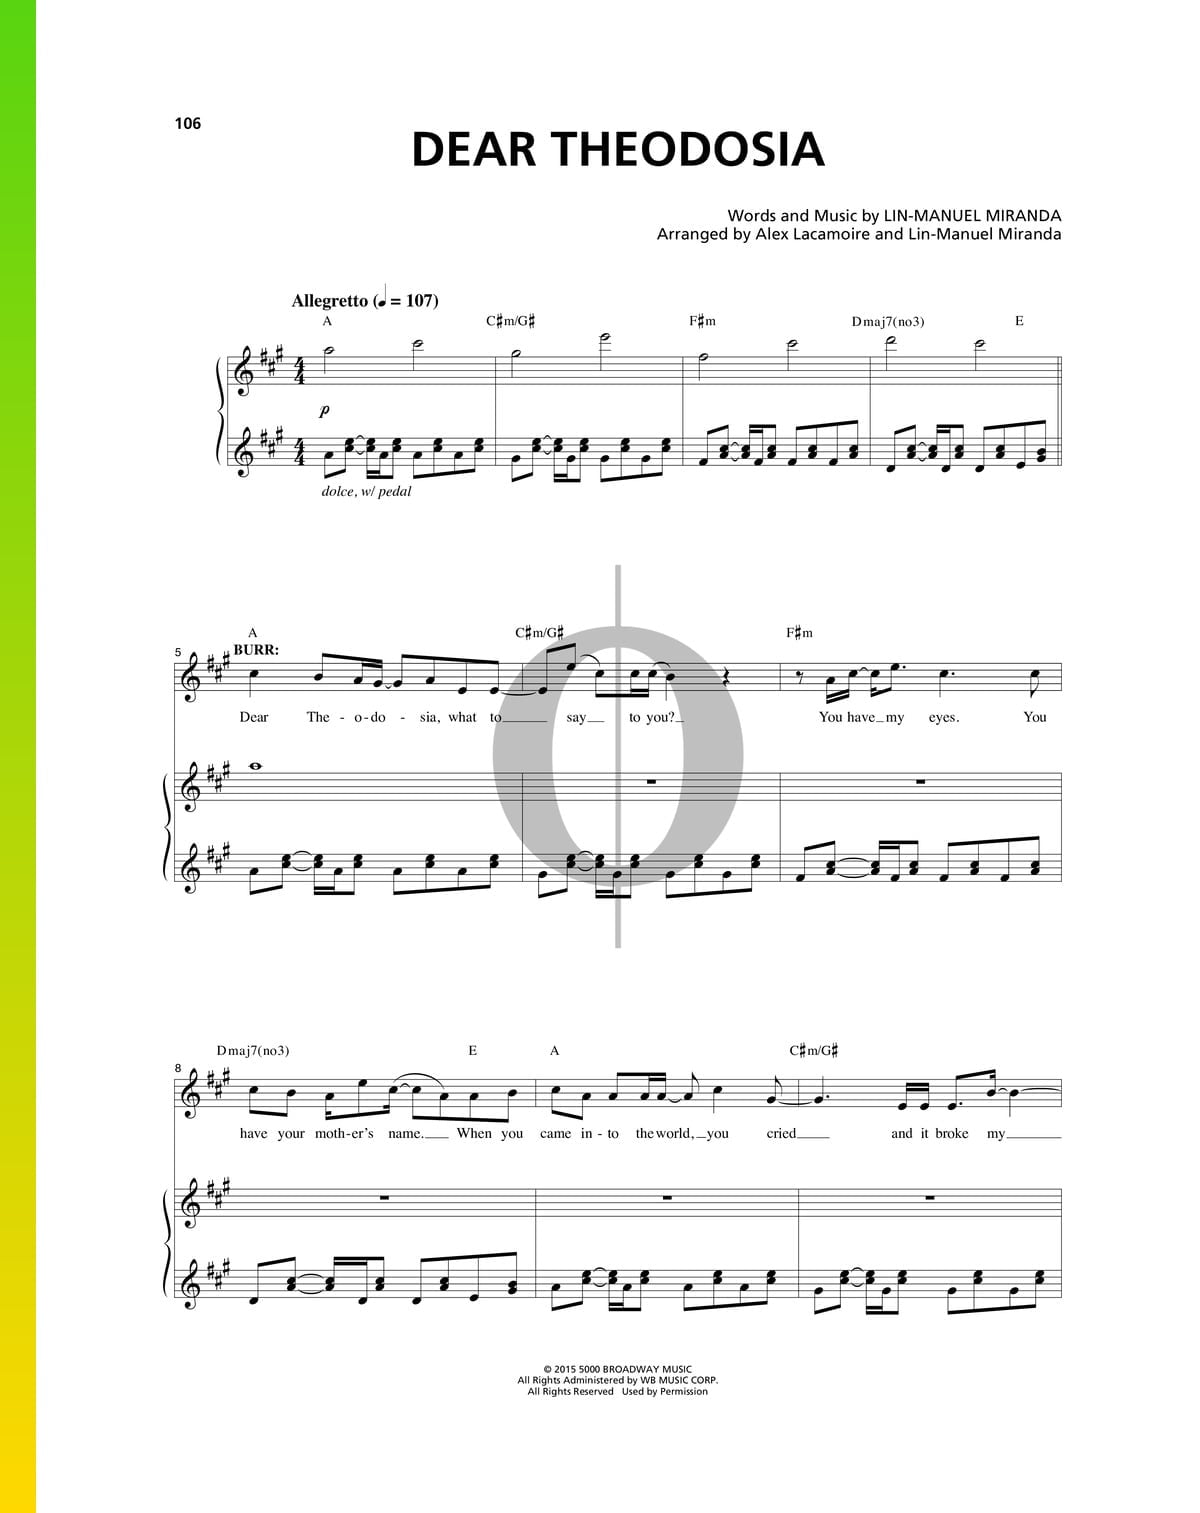 matiz Acuoso Fe ciega Dear Theodosia Partitura » Lin-Manuel Miranda (Piano, Voz) | Descarga PDF -  OKTAV